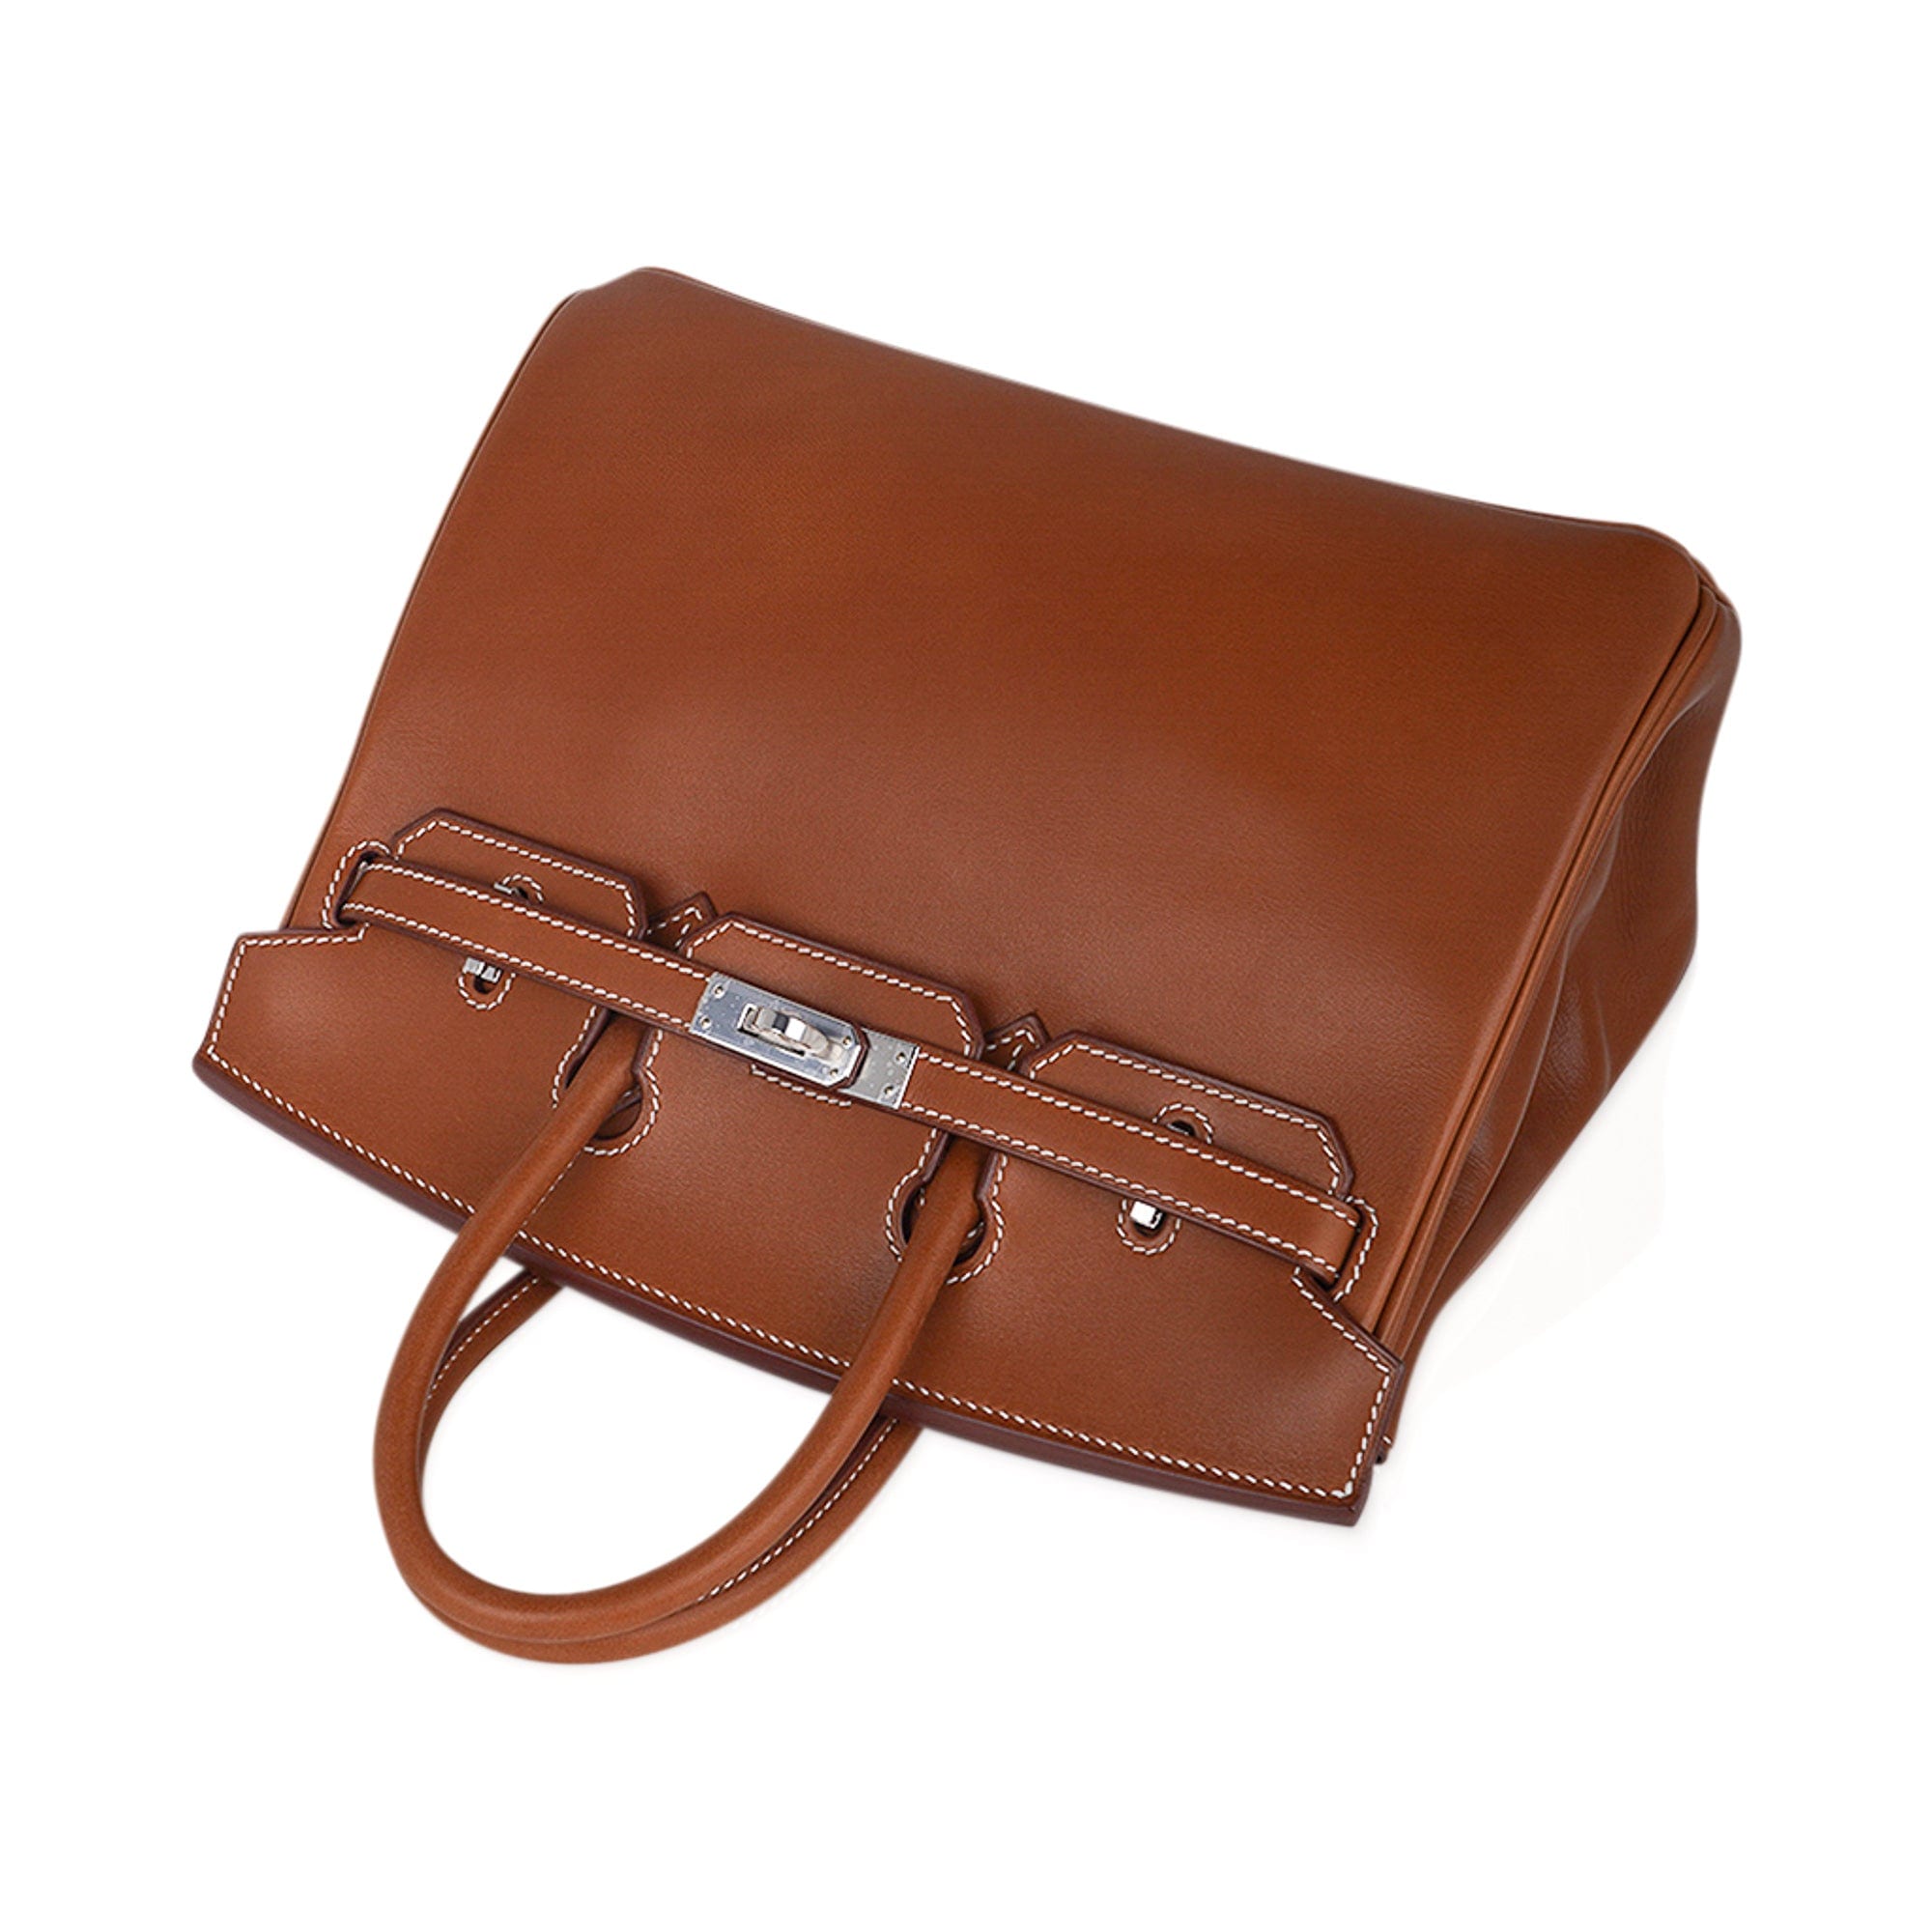 Hermes Limited Edition Birkin 25 Fauve Barenia Leather Bag